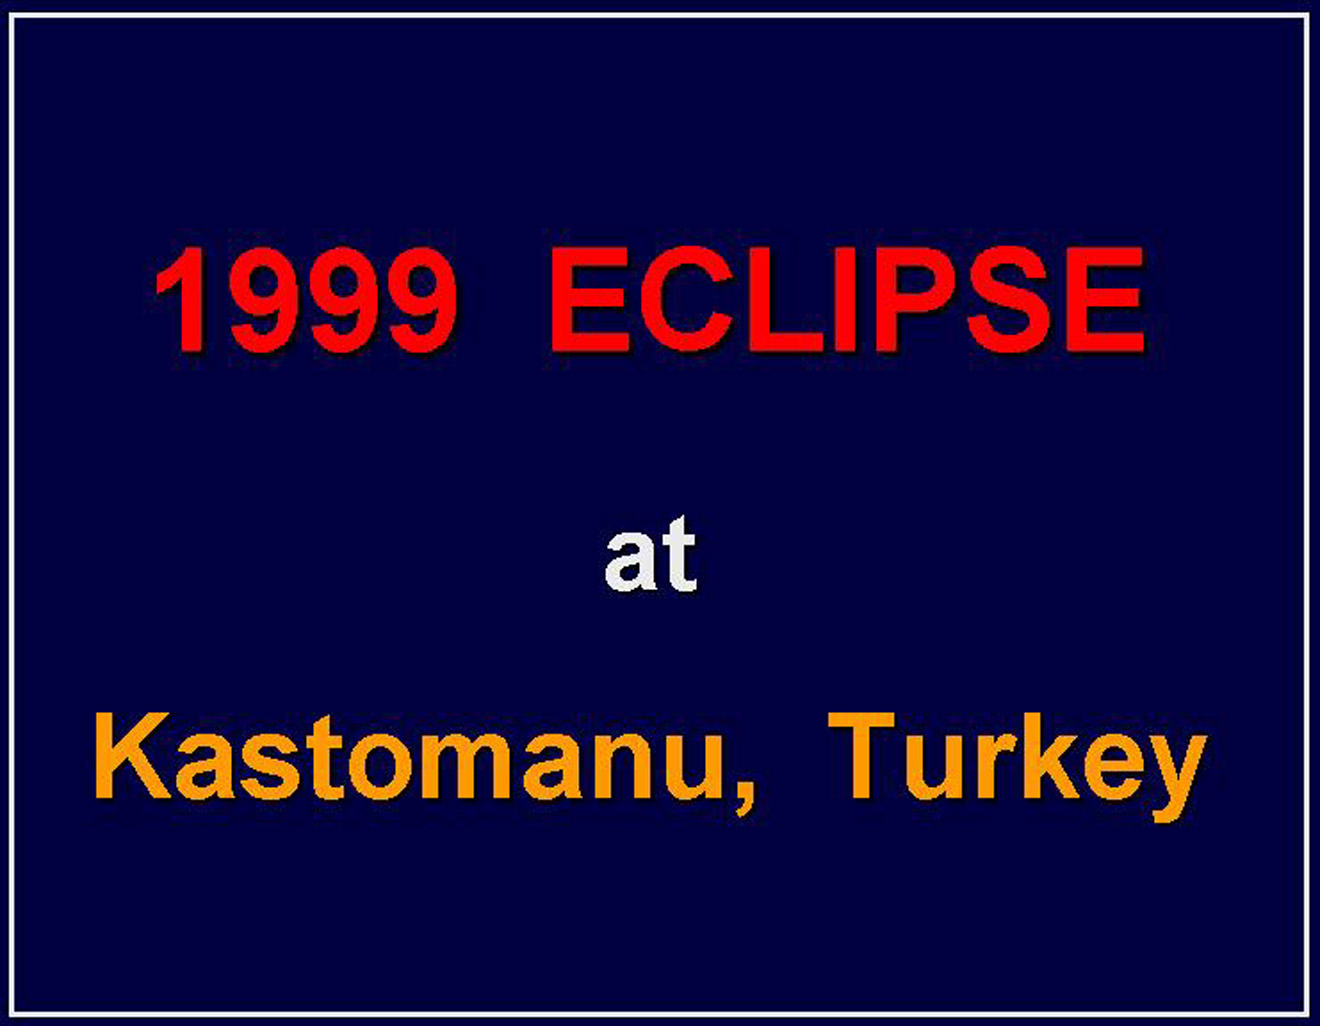 Eclipse 1999 - A00 - Title Slide